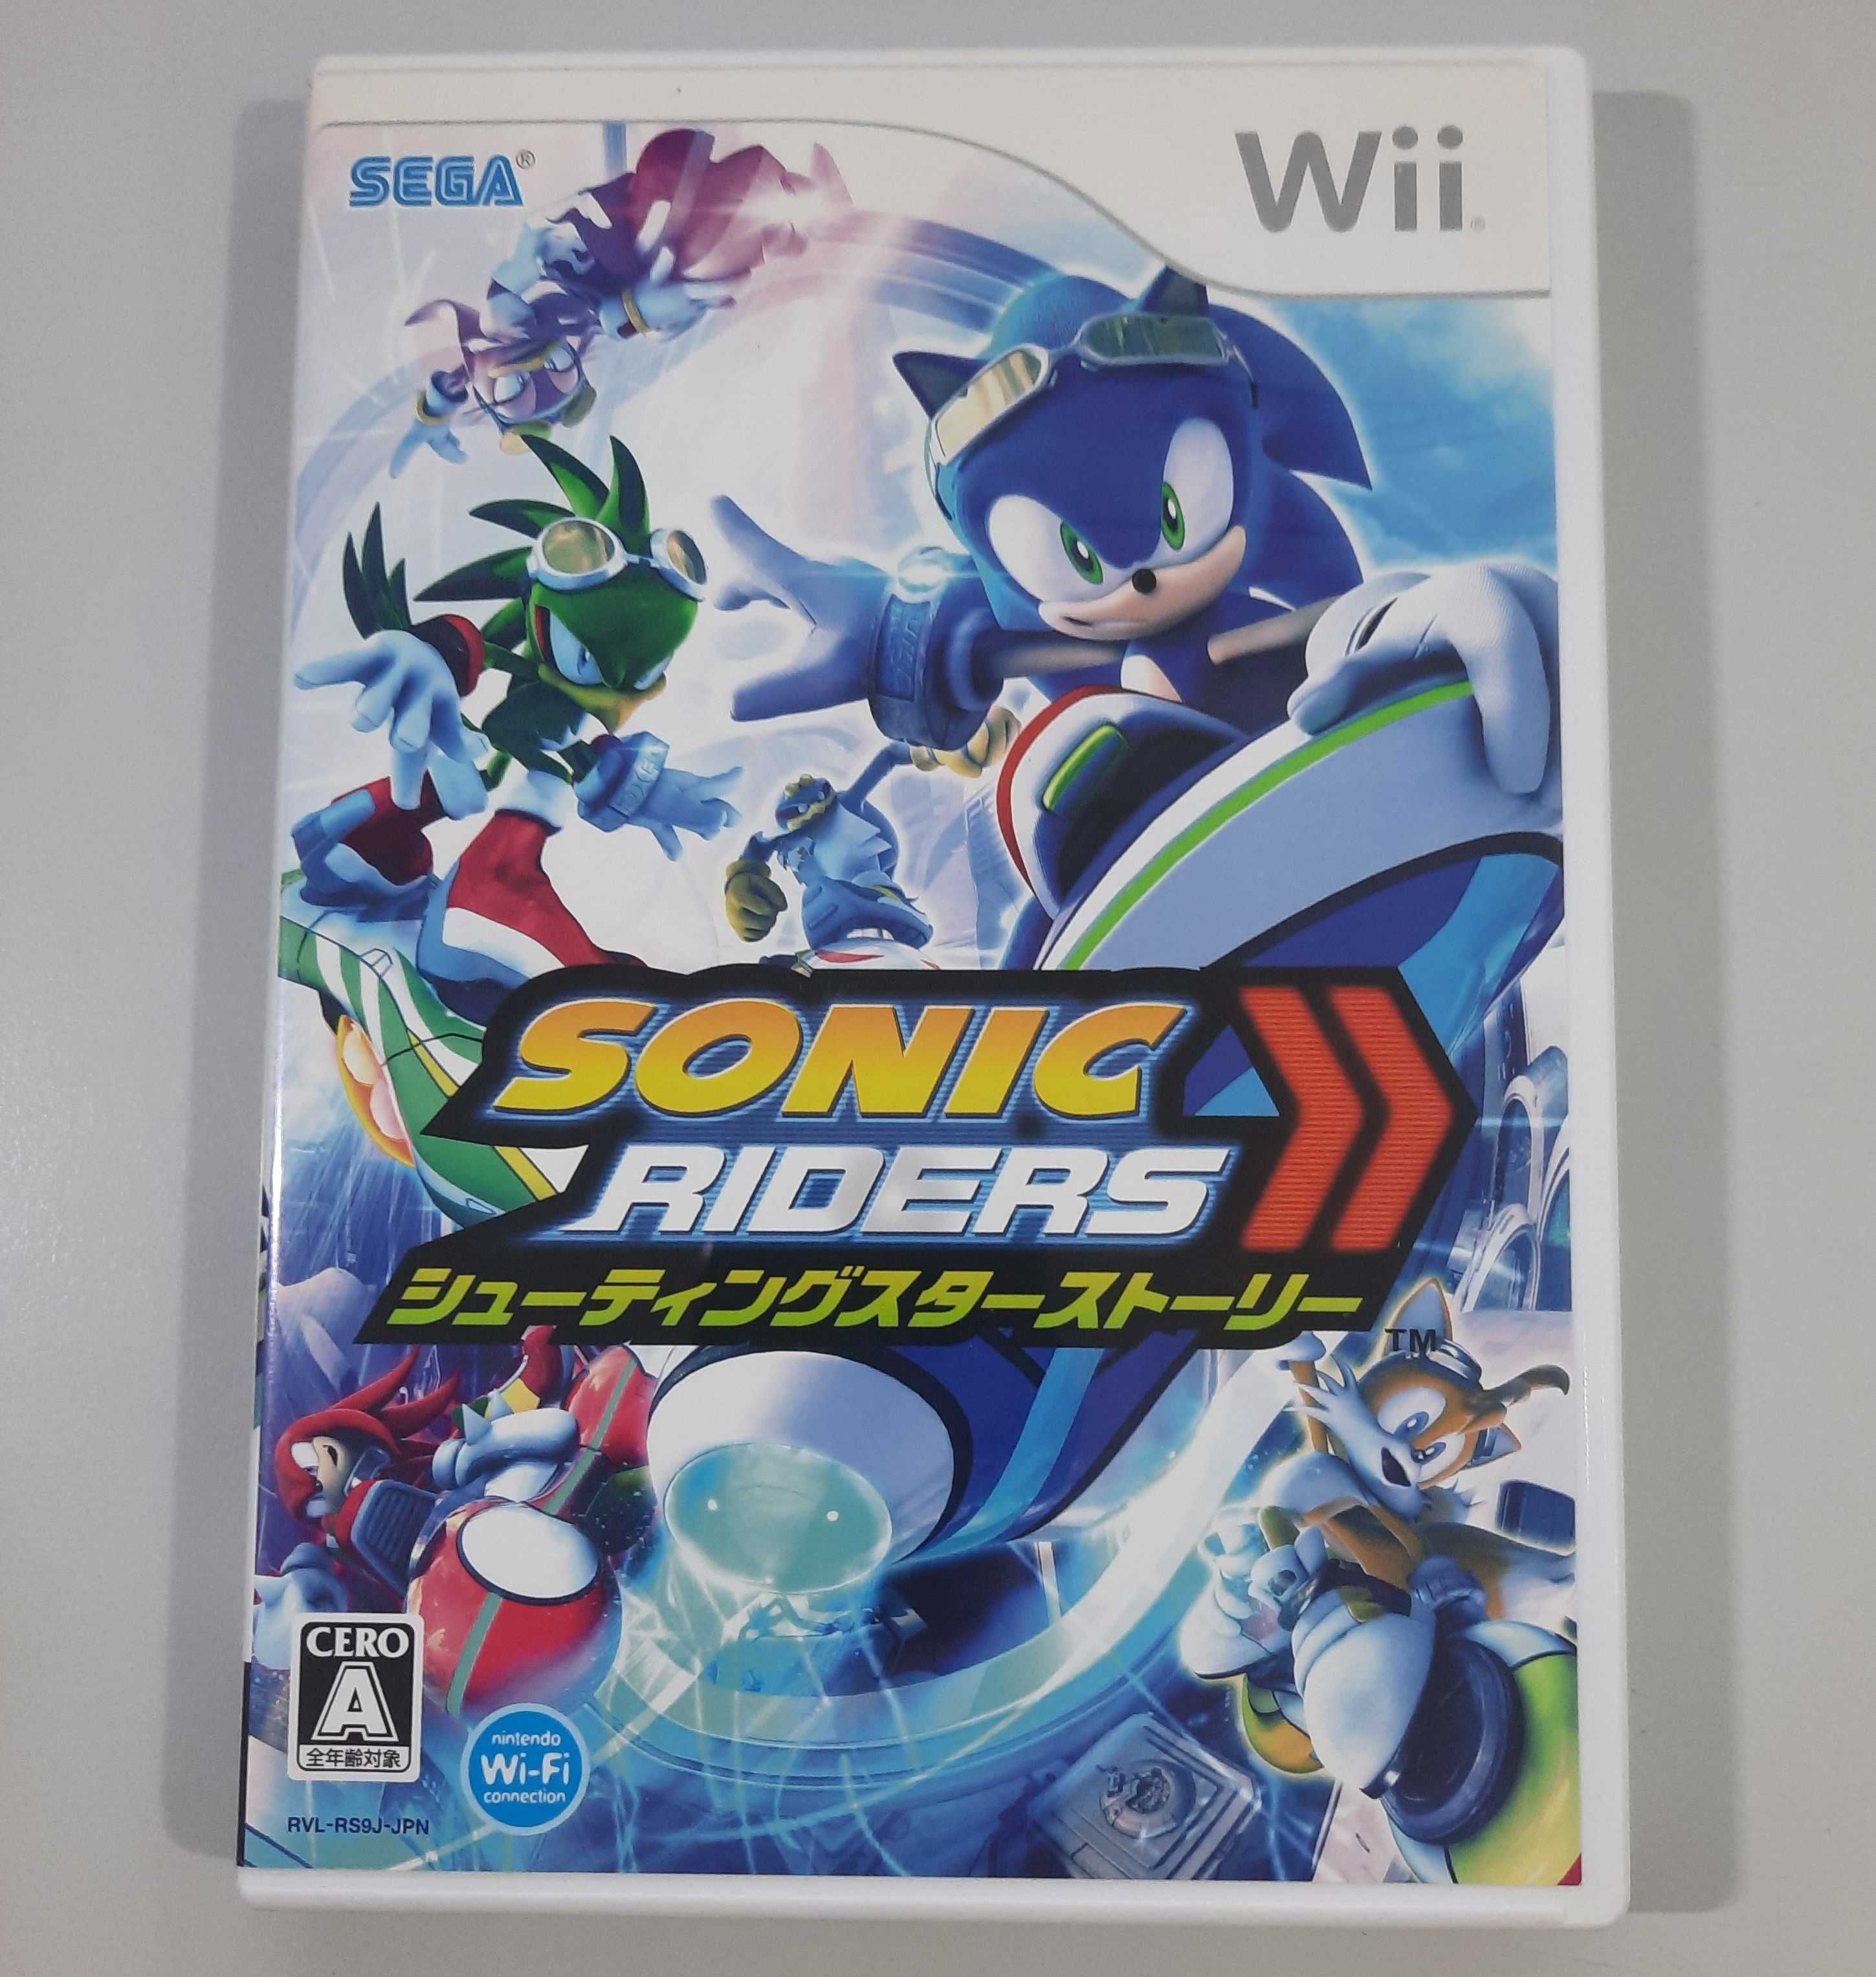 Sonic Riders: Shooting Star Story / Wii [NTSC-J]